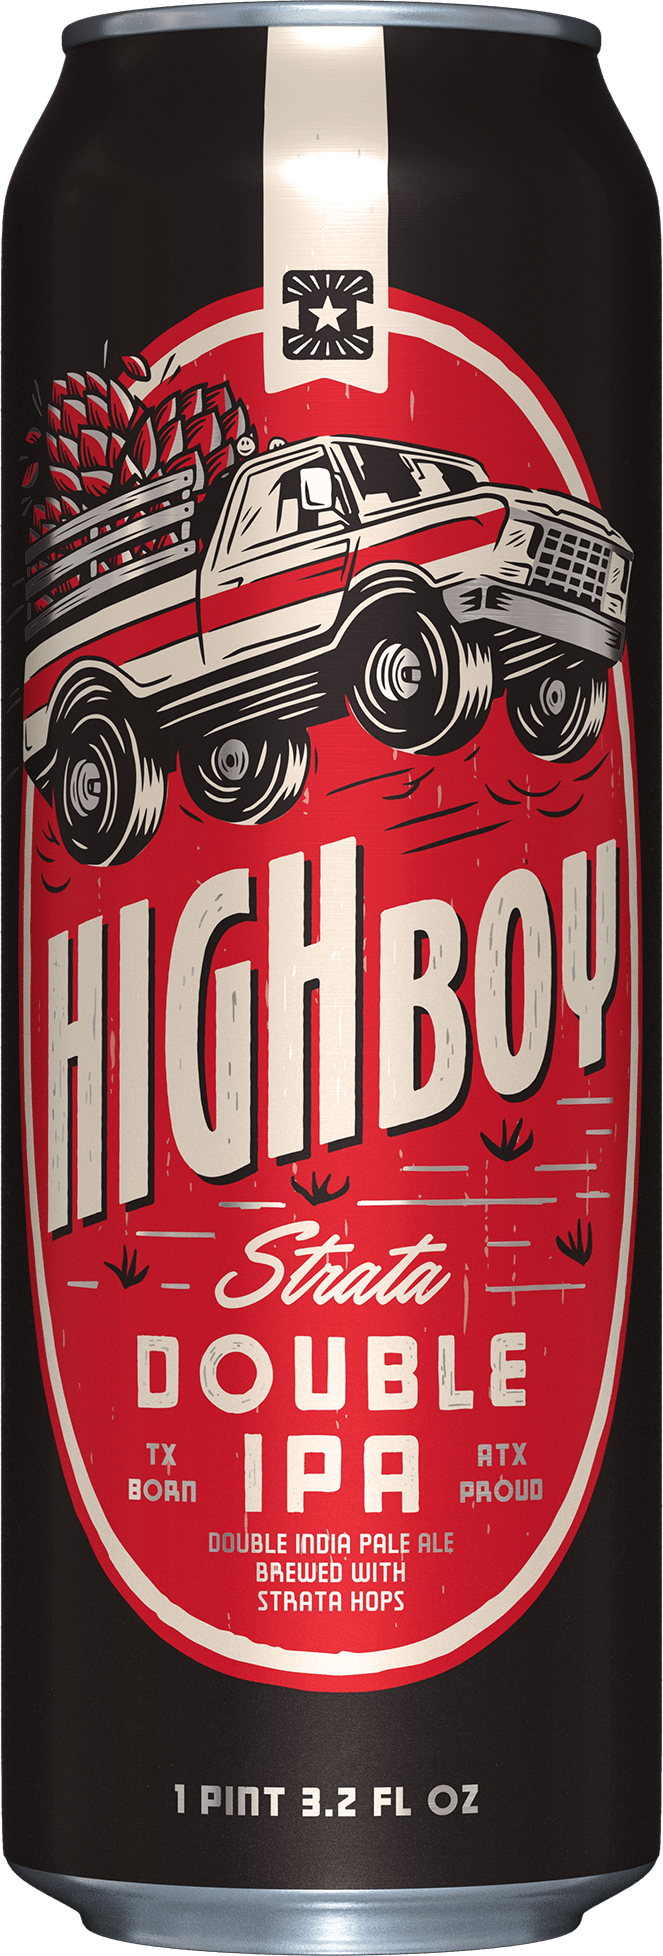 Highboy: Strata